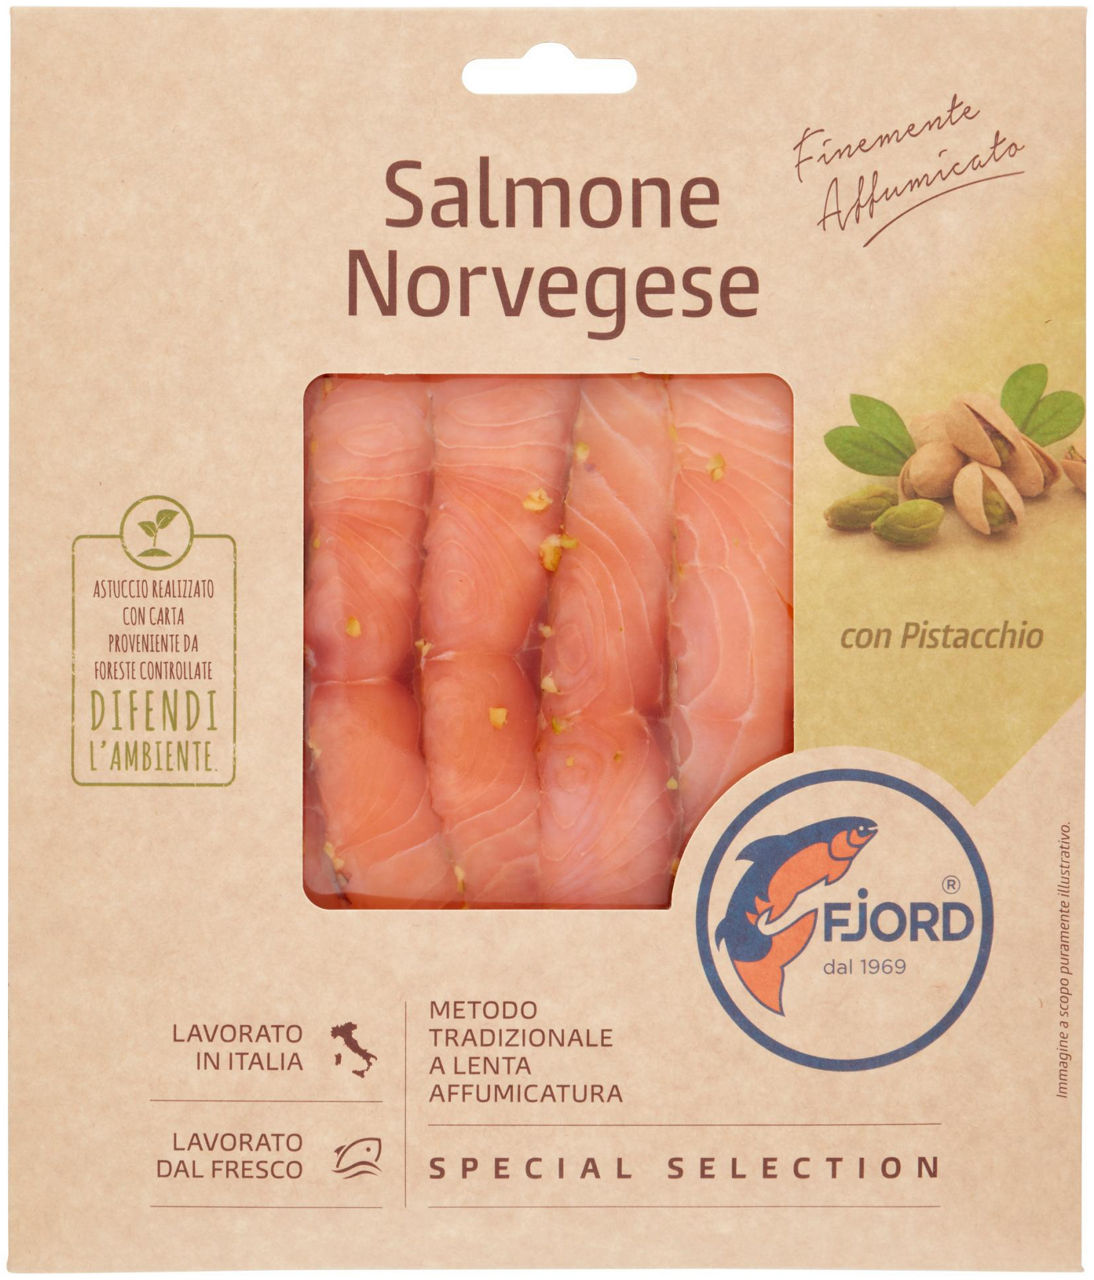 Salmone norvegese aff. sashimi al pistacchio ast. sv fjord g 100